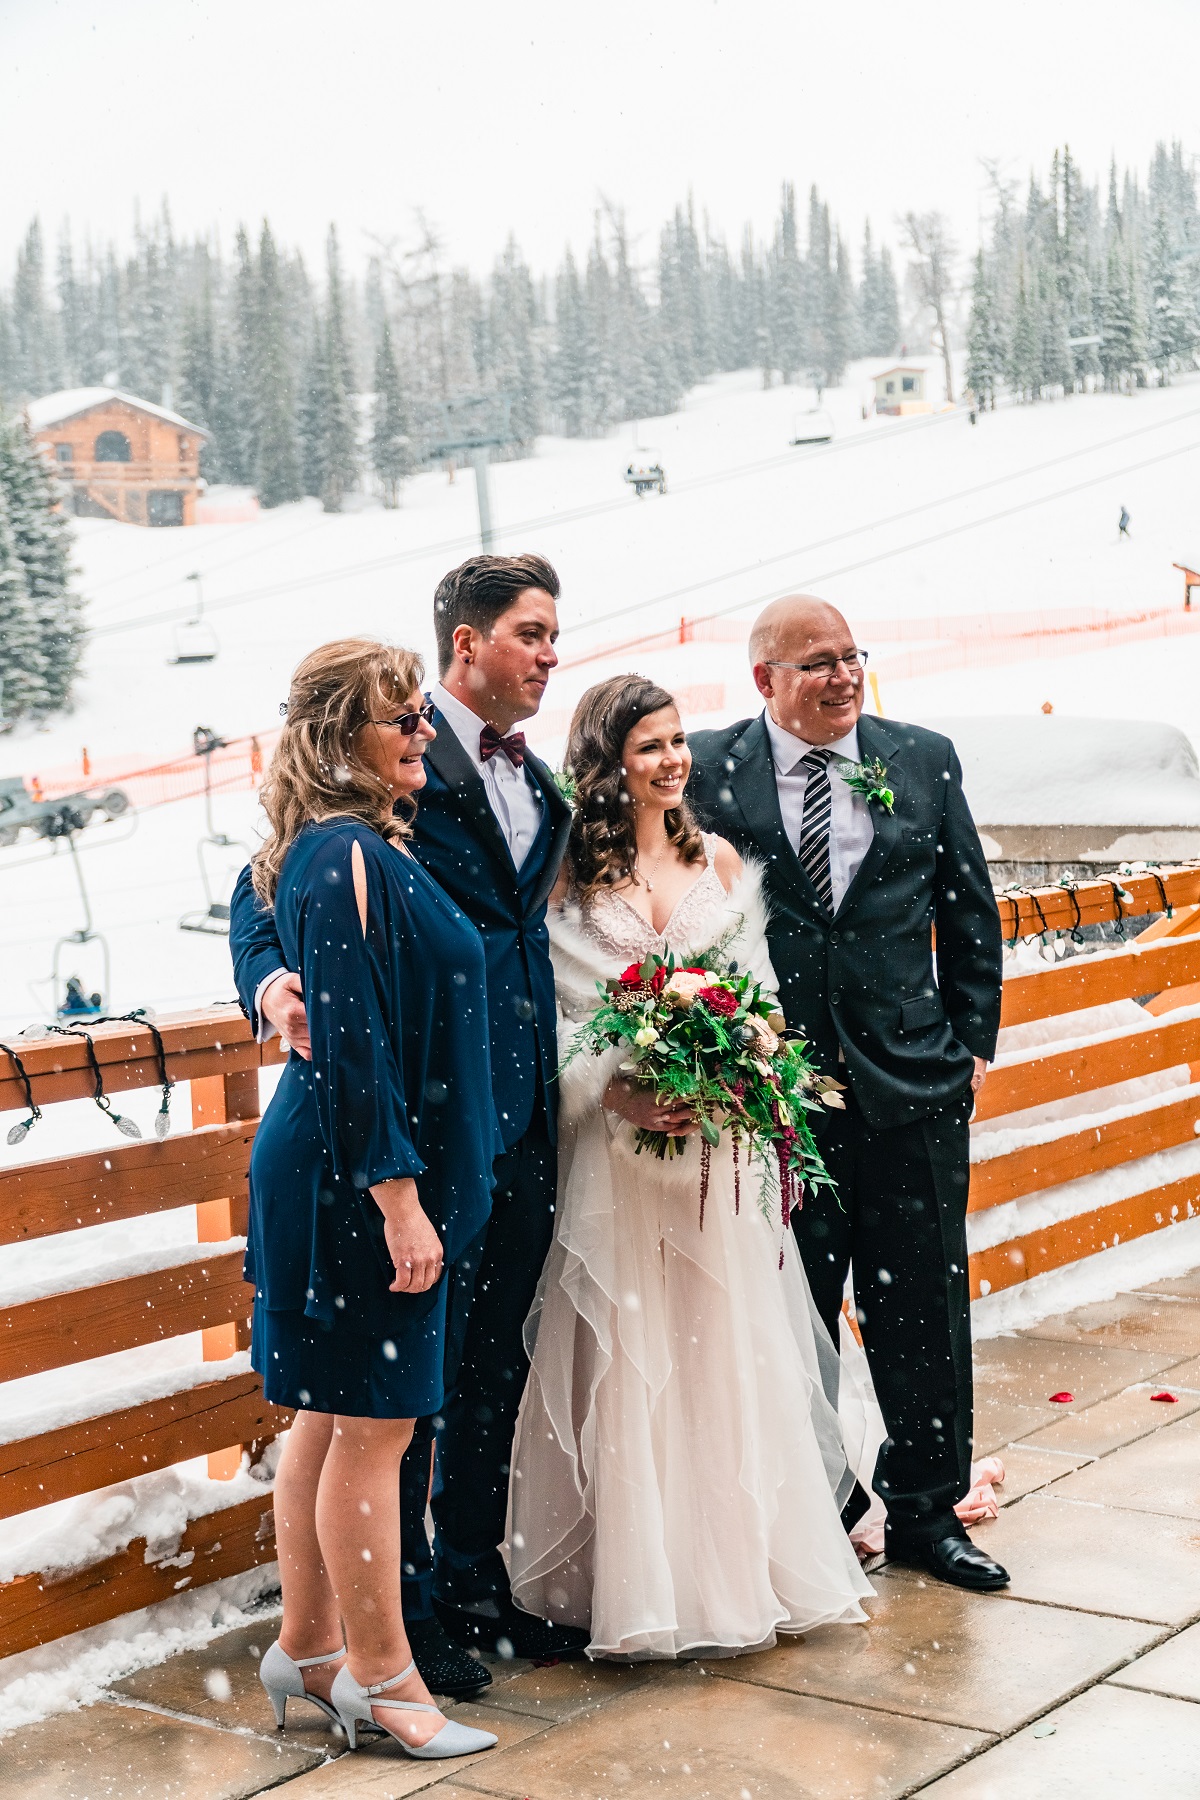 April 27th, 2019 - Wedding Photos edited (Pat)-16.jpg